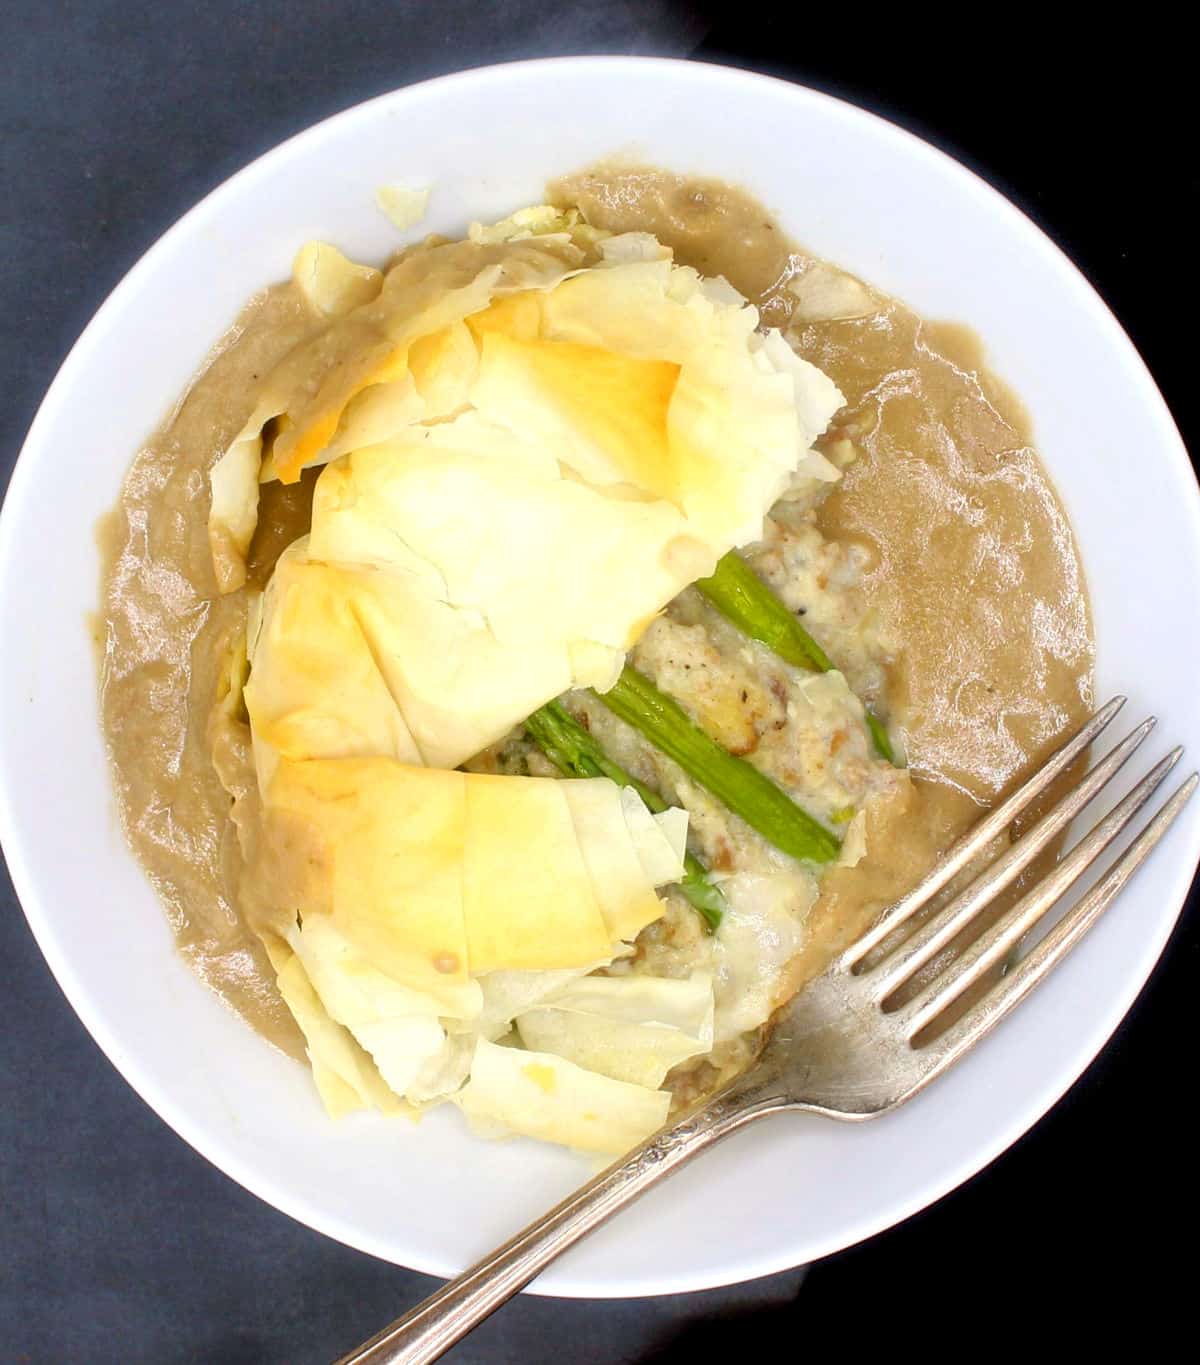 Vegan asparagus potato tart with vegan gravy in a bowl with fork.